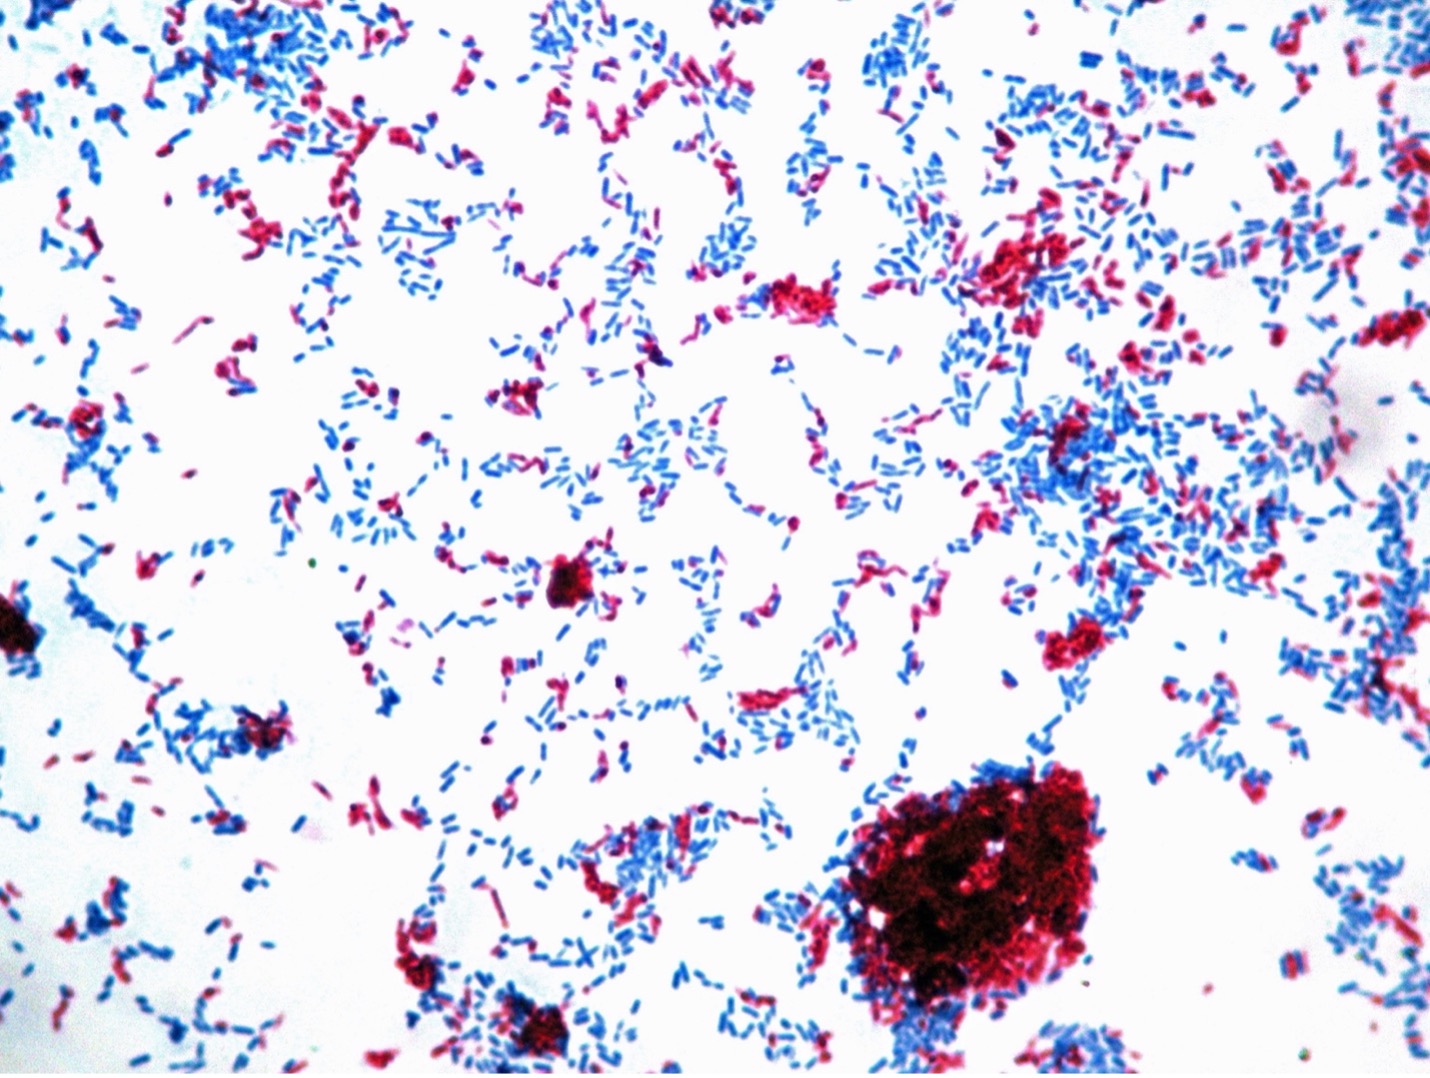 mycobacterium tuberculosis acid fast stain